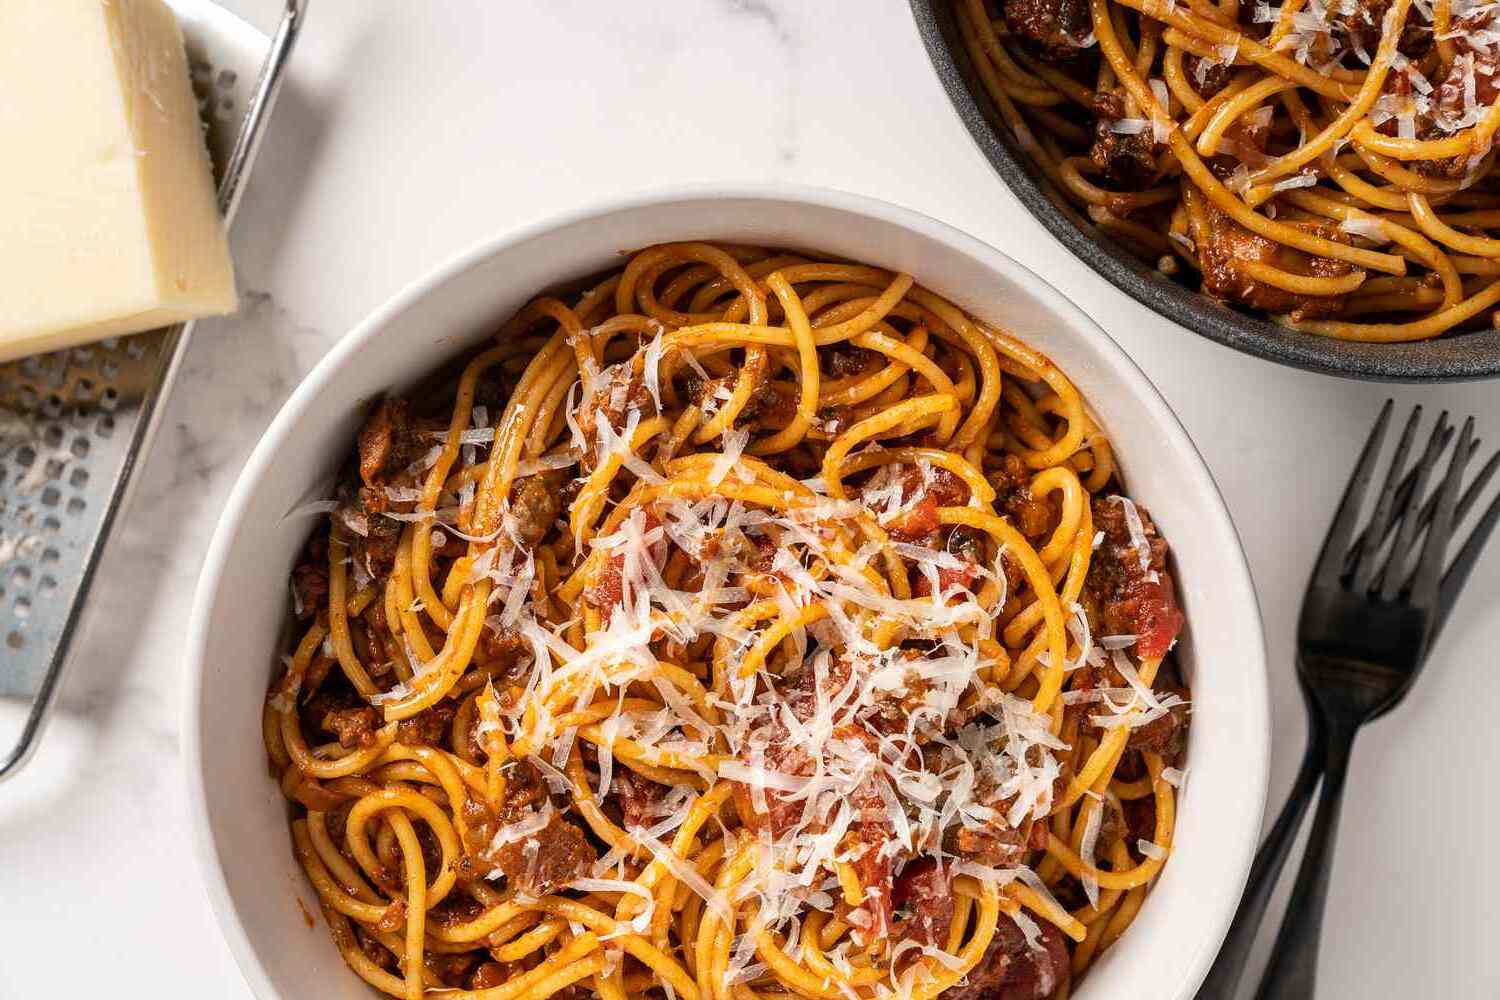 How to make Spaghetti Bolognese in the Ninja Foodi pressure cooker